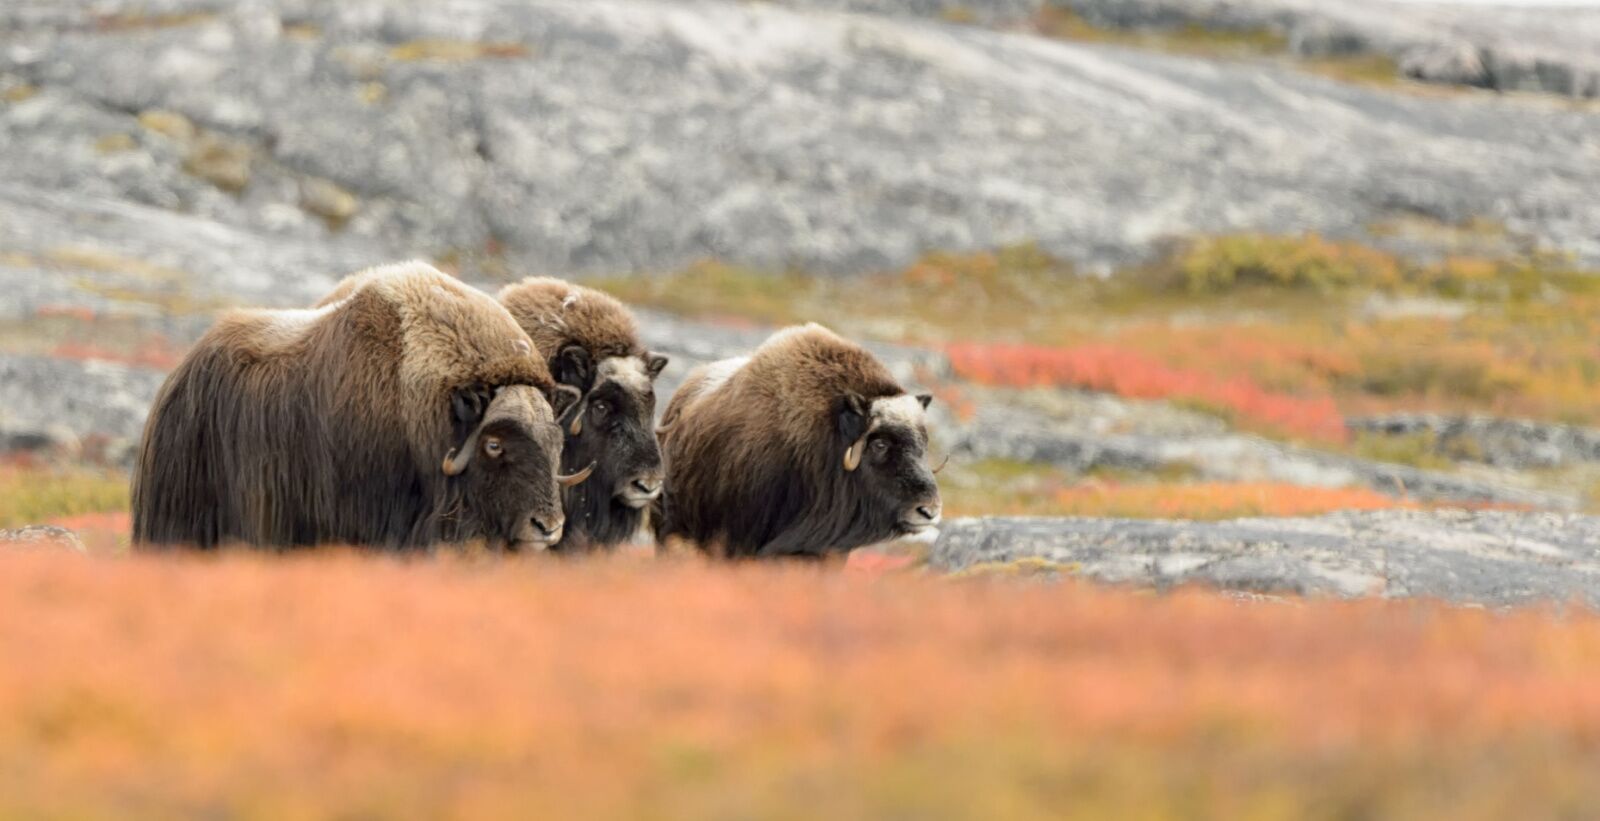 Musk ox roaming in Nunavik, Canada